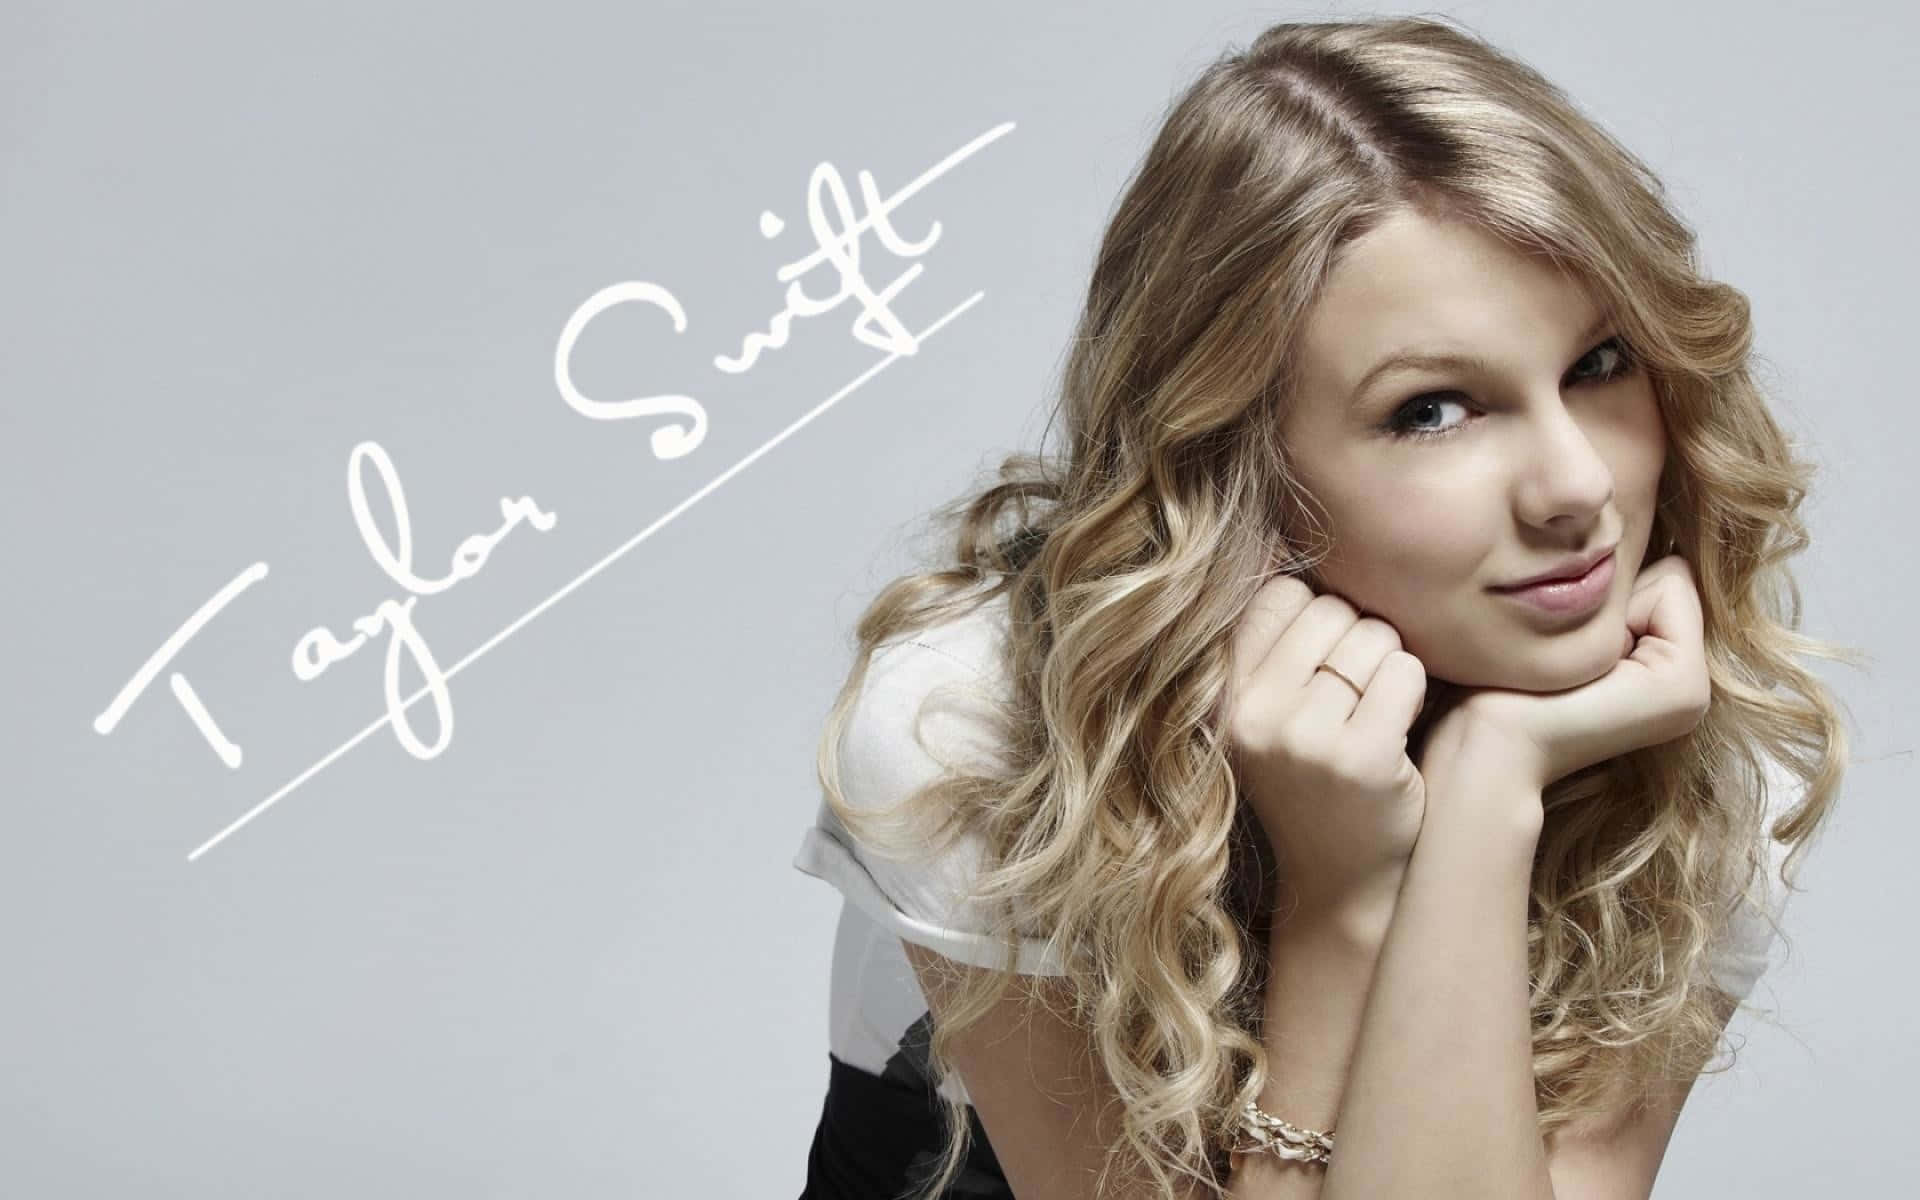 Taylor Swift Signature Pose Wallpaper